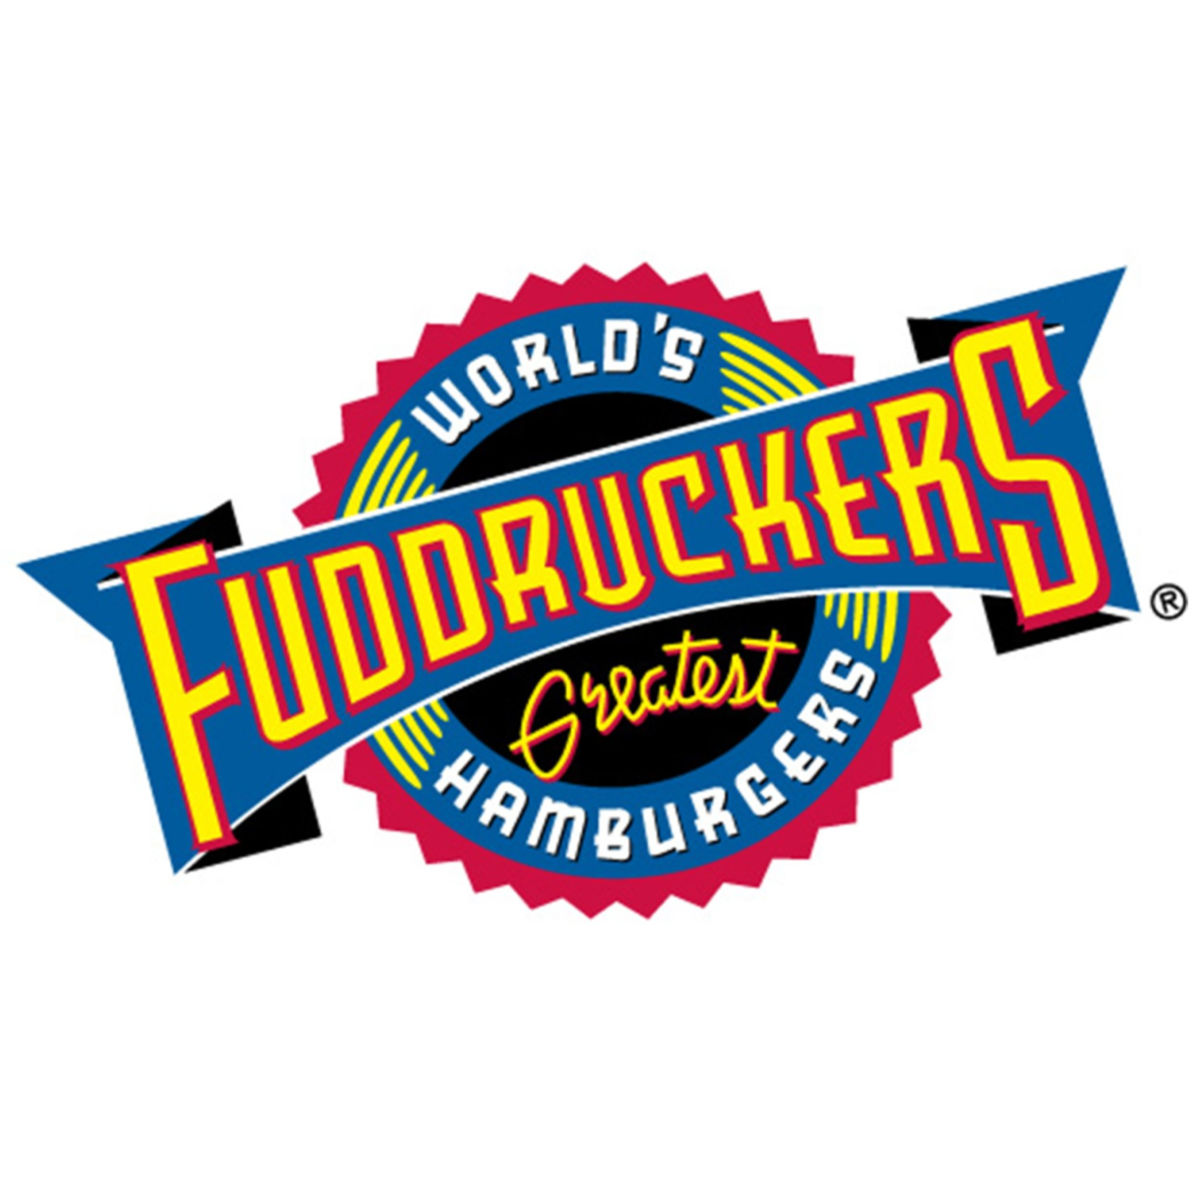 Fuddruckers Logo